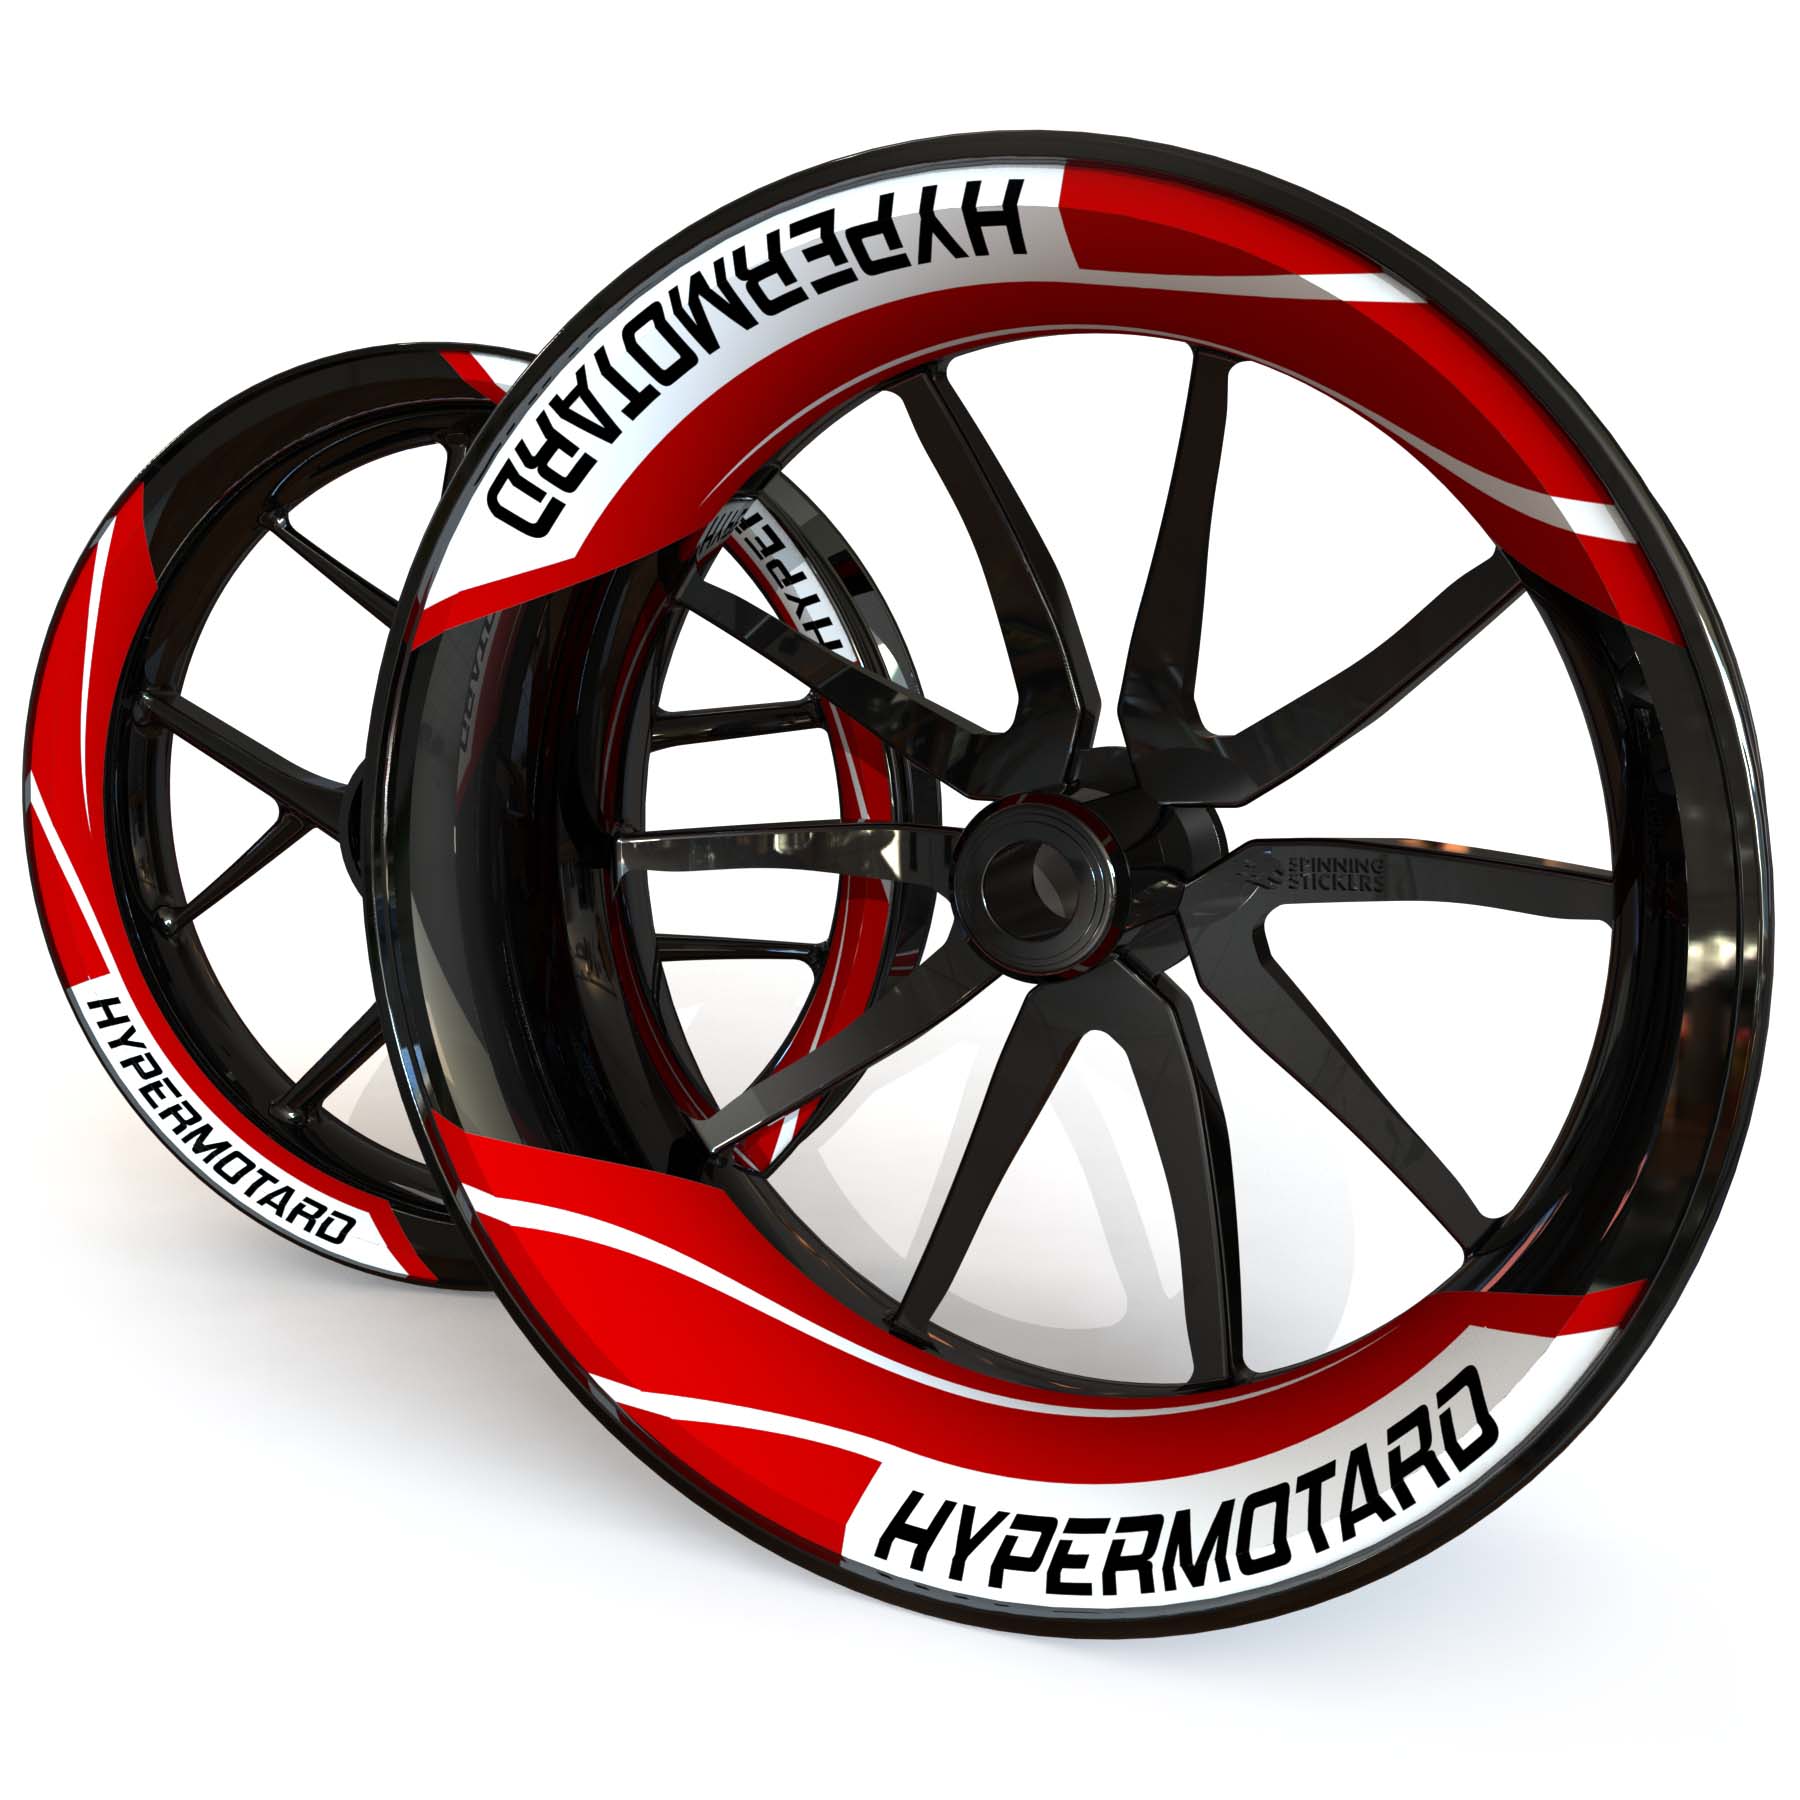 Ducati Hypermotard Wheel Stickers kit - Two Piece Design